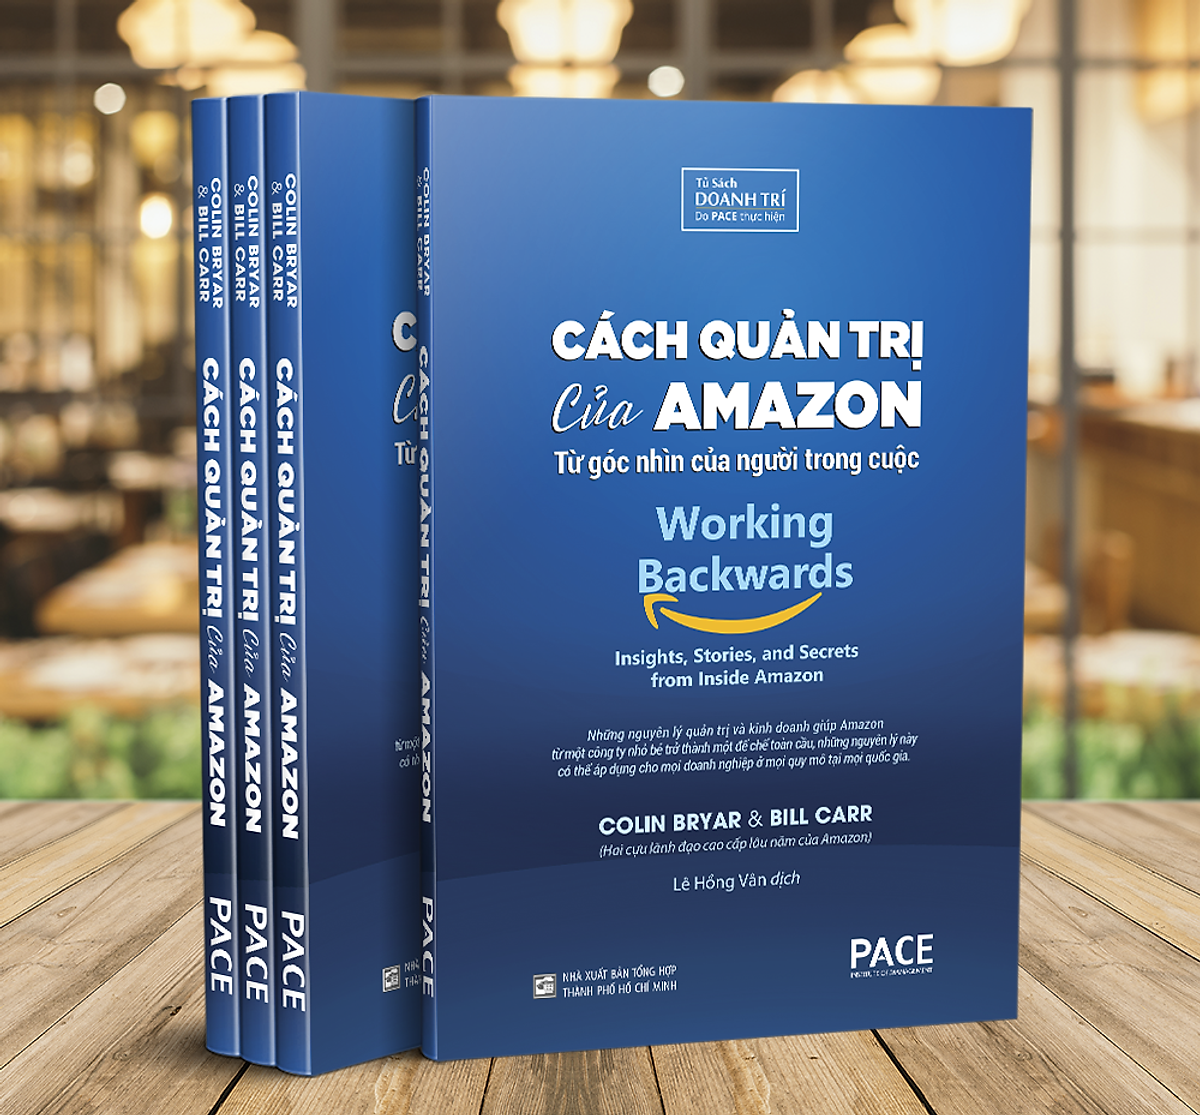 Cách Quản Trị Của Amazon (Working Backwards) - Colin Bryar, Bill Carr - PACE Books